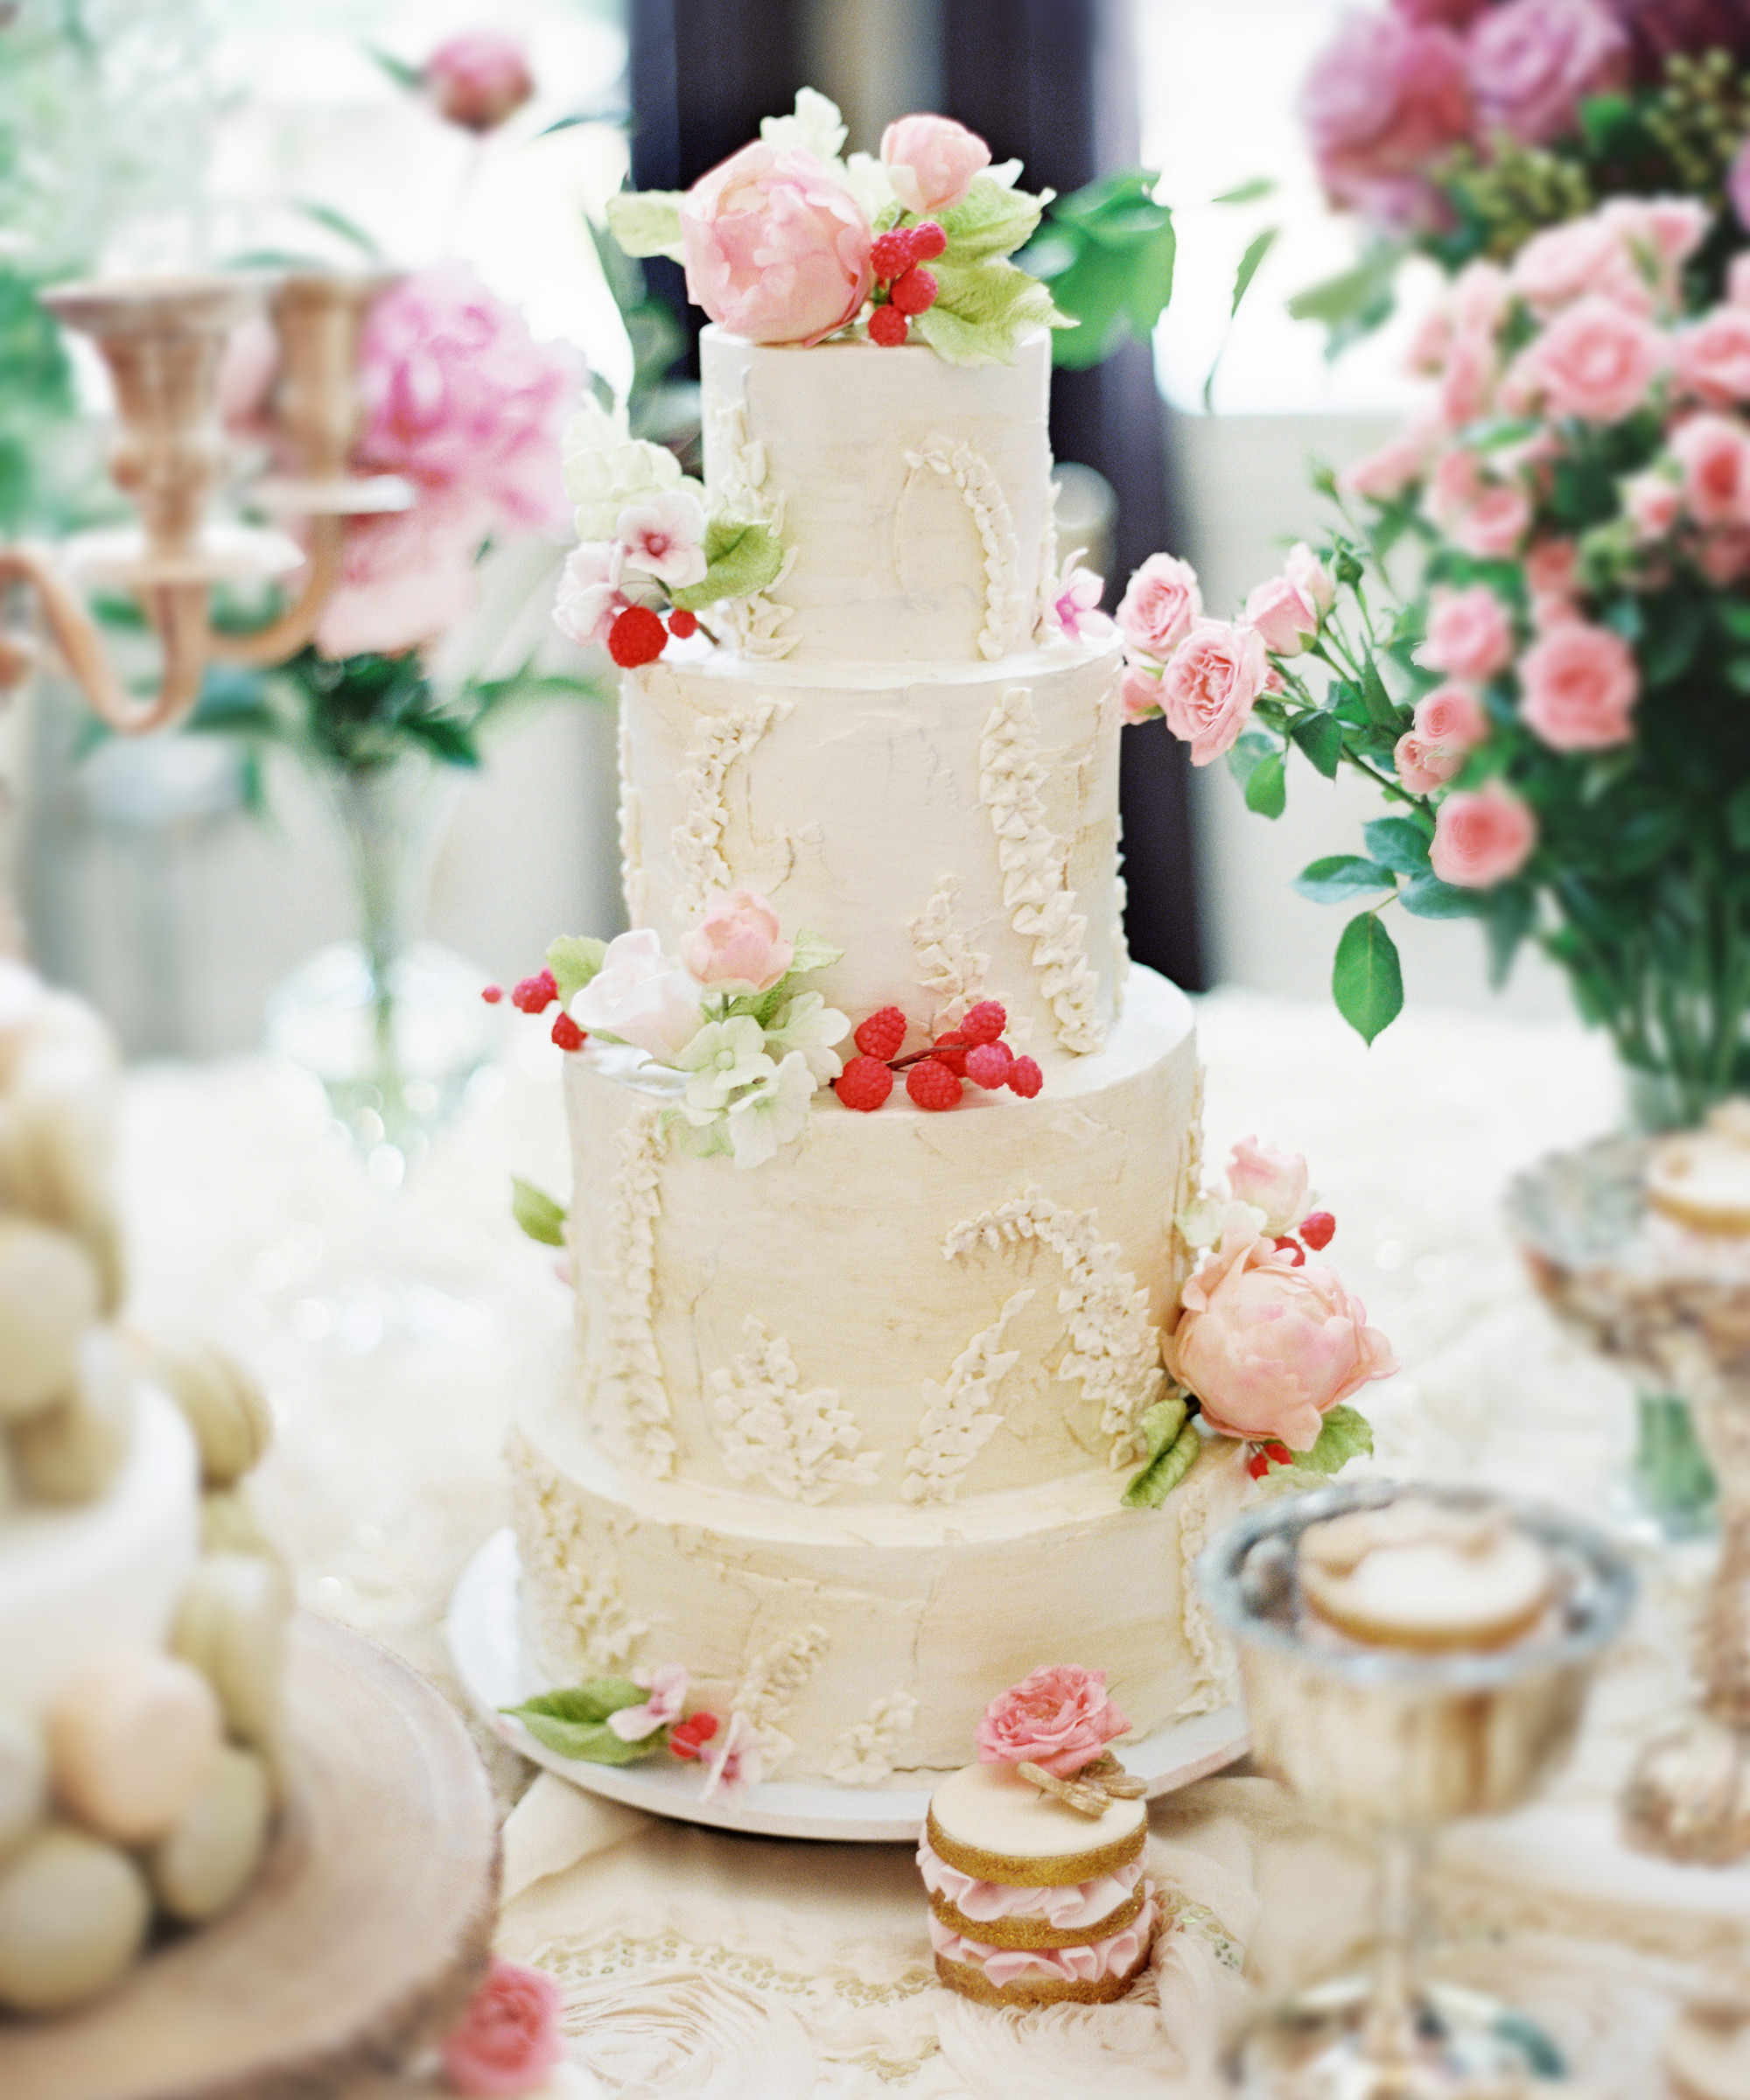 Wedding Cakes Com
 Vegan and Gluten Free Wedding Cake Ideas Alternative